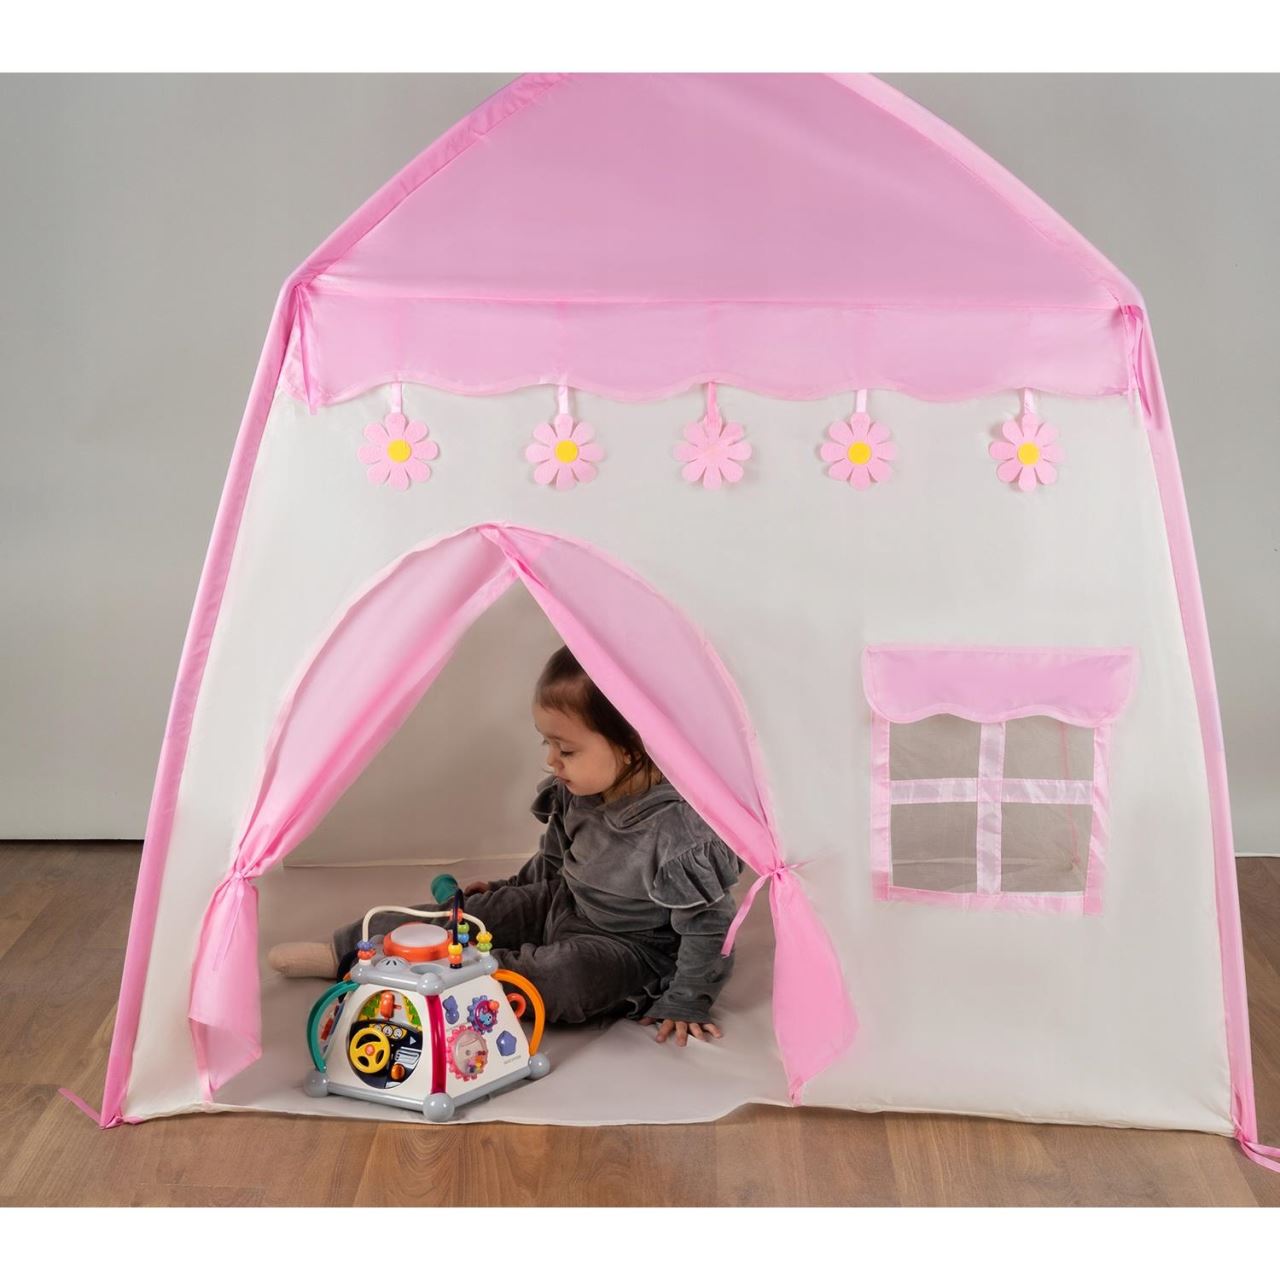 Cort de joaca pentru copii, cu lampi rotunde, roz si alb, 130x90x126 cm, Kruzzel GartenVIP DiyLine